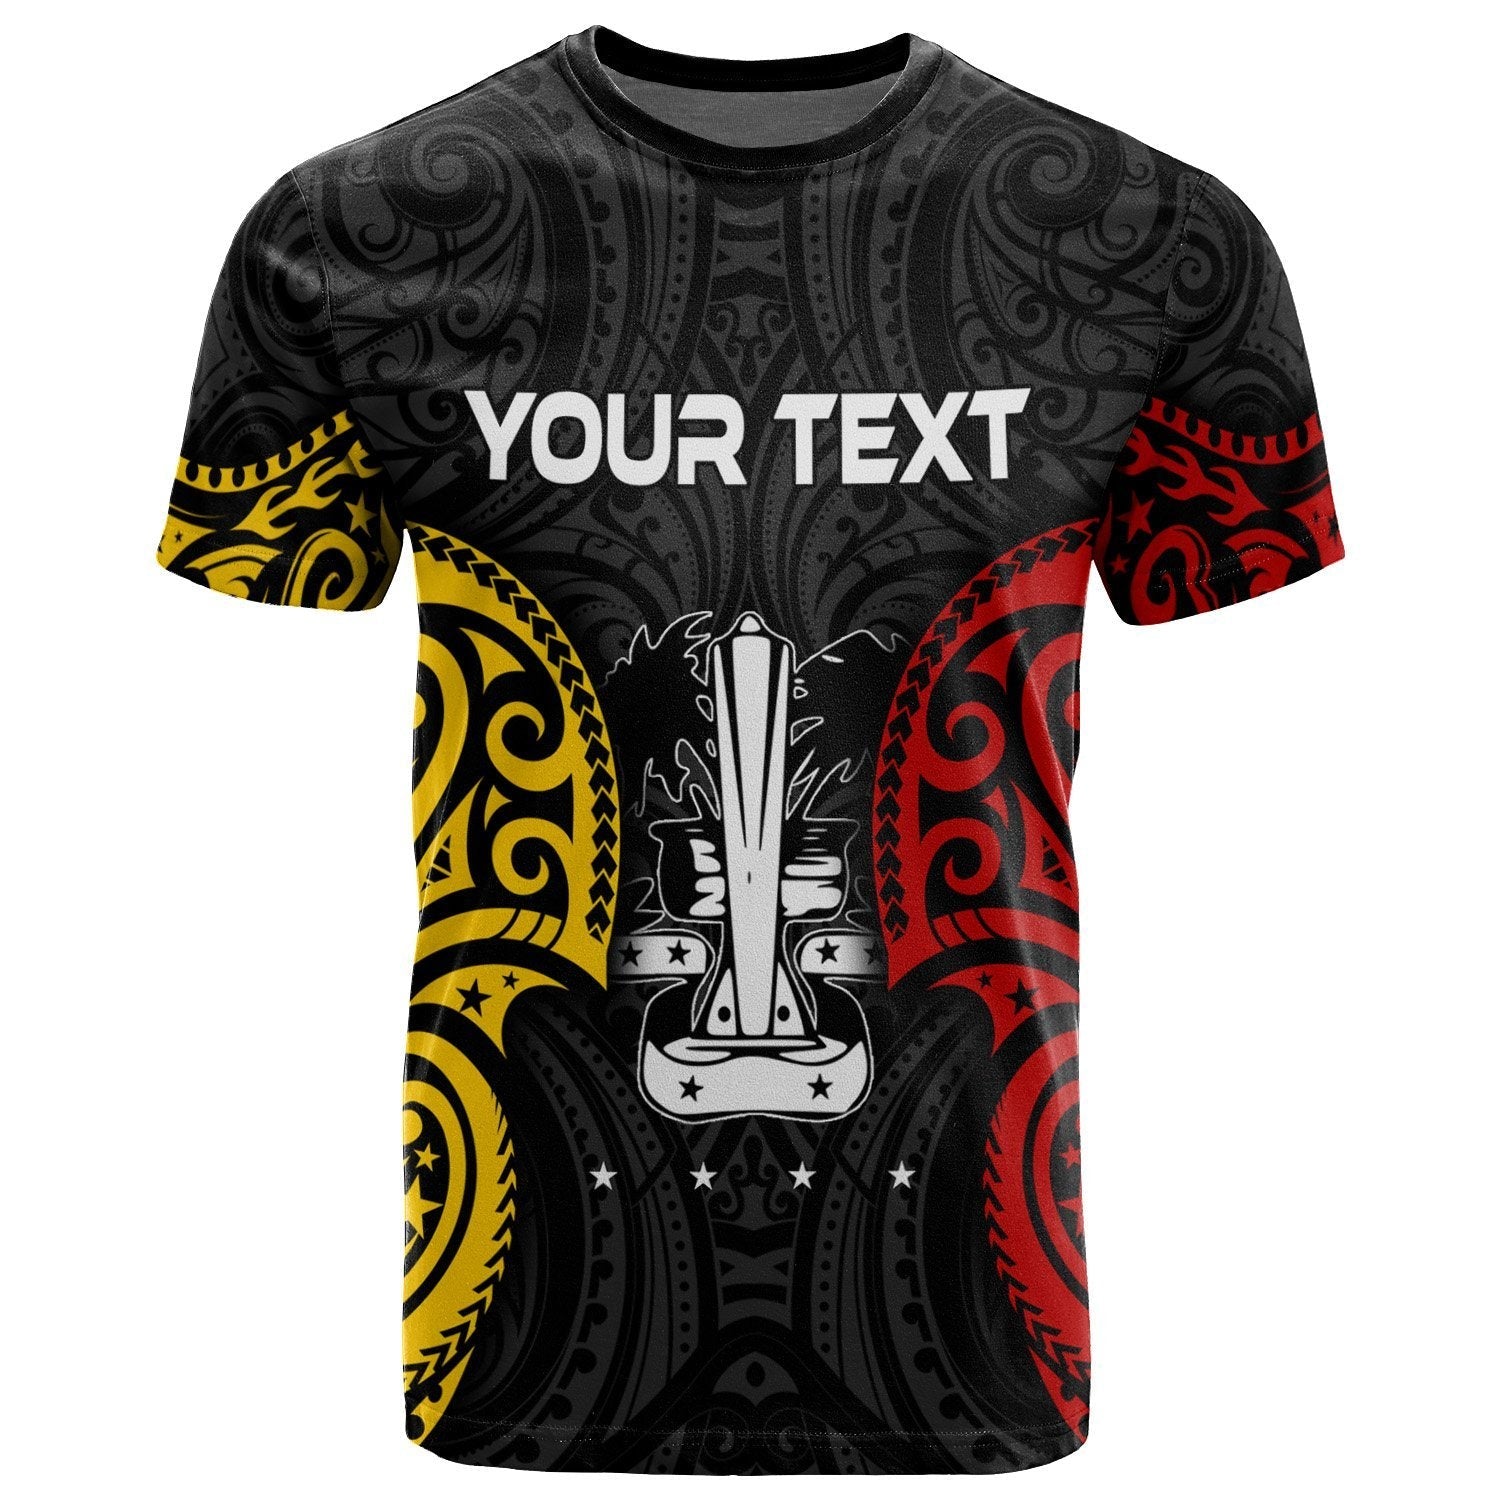 papua-new-guinea-madang-province-polynesian-custom-personalised-t-shirt-spirit-version